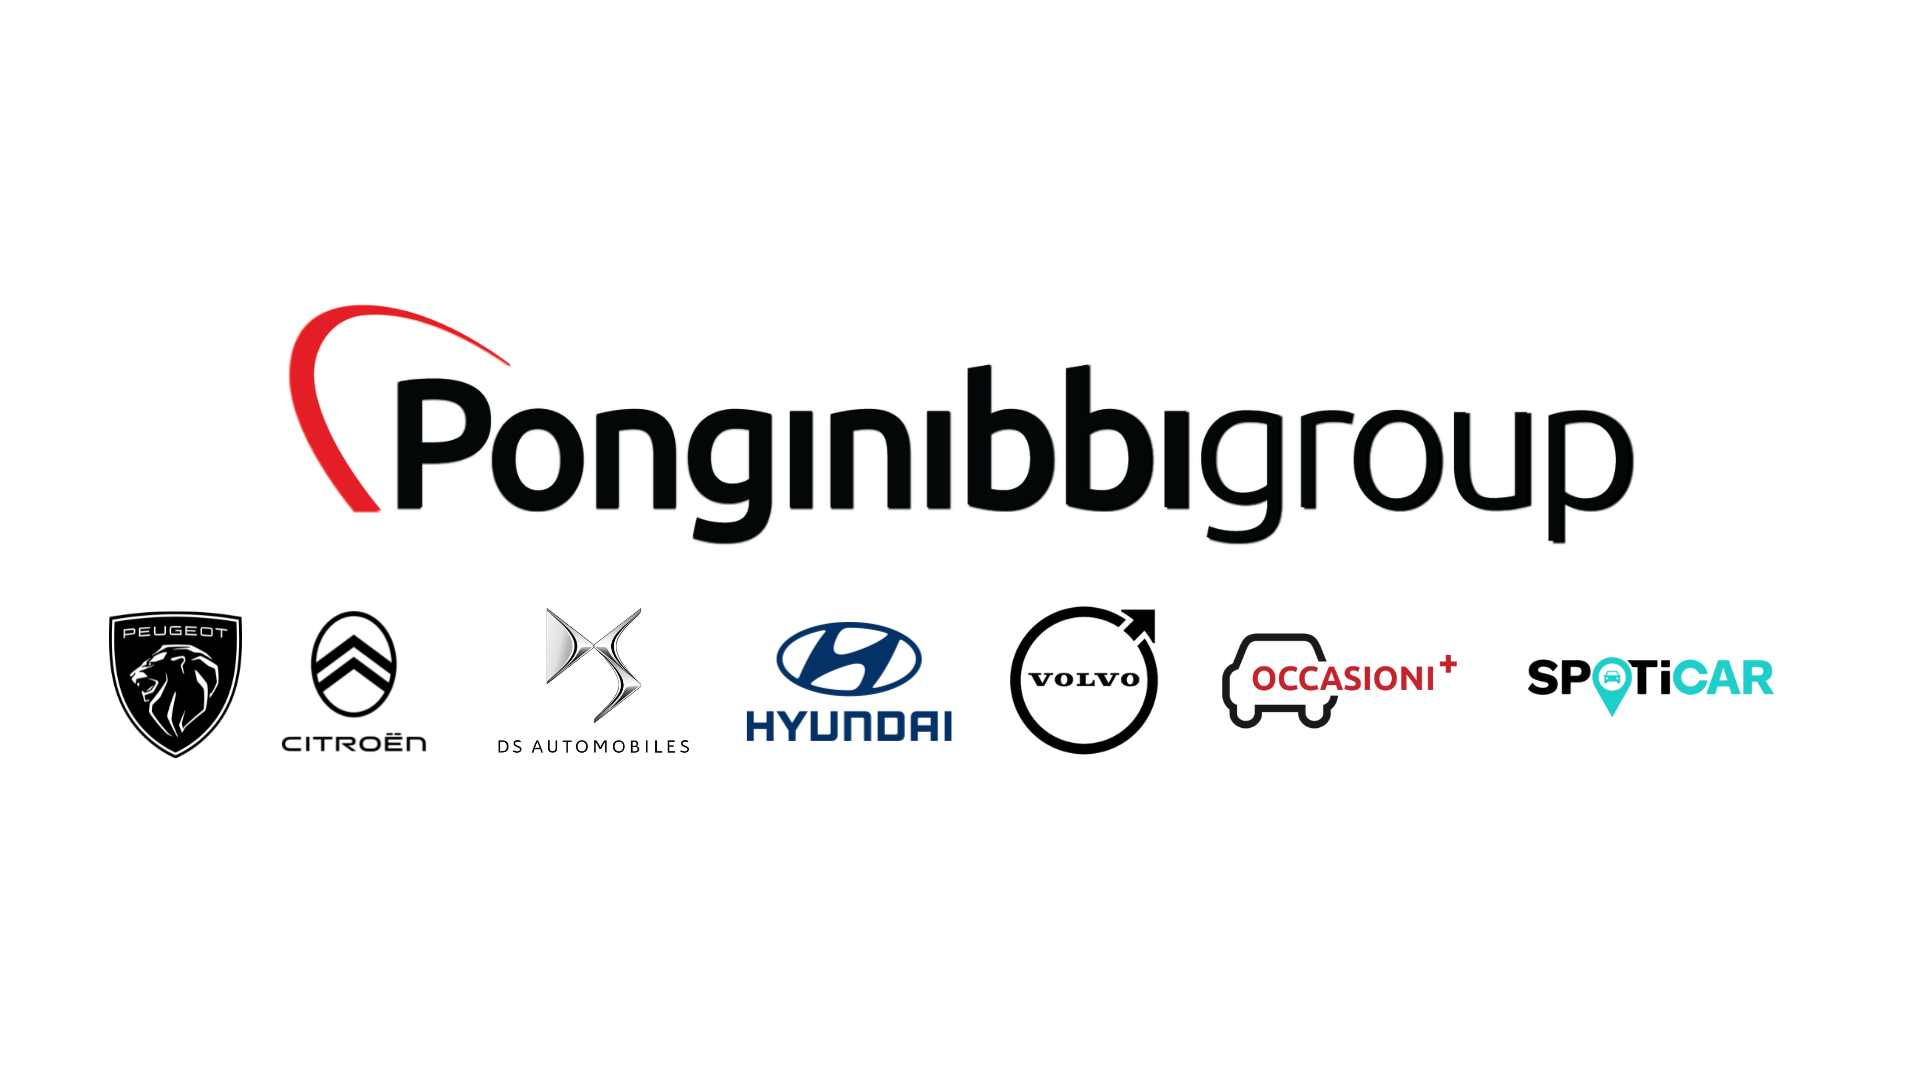 Ponginibbi Group